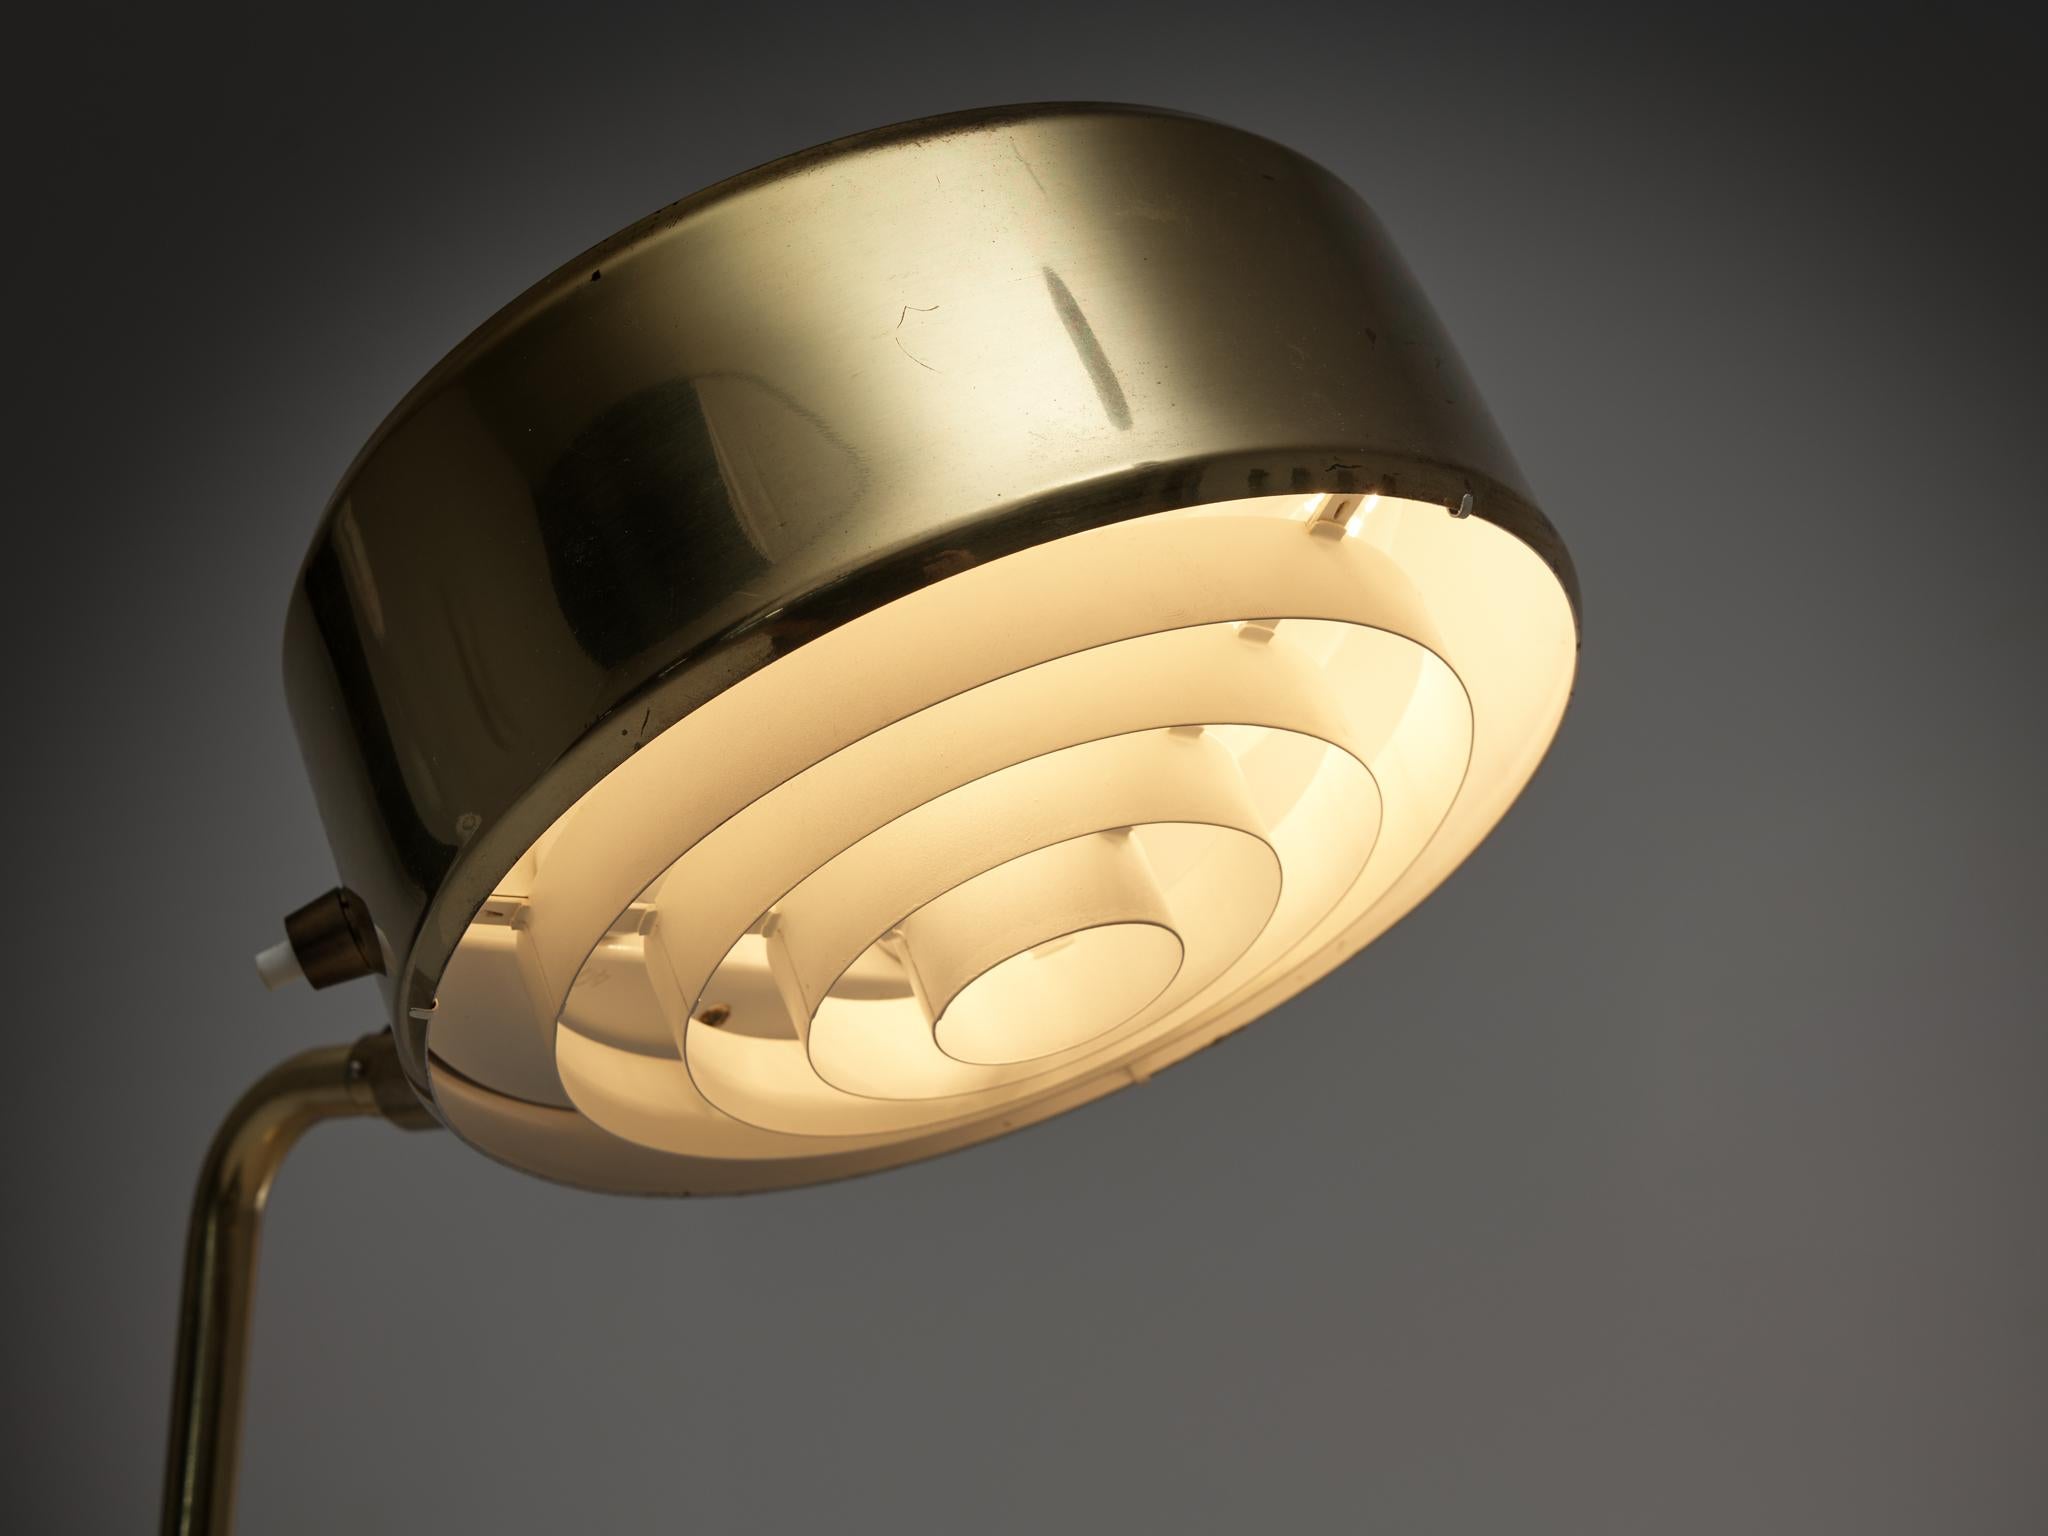 Mid-Century Modern Anders Pehrson Table Lamps for Ateljé Lyktan in Brass